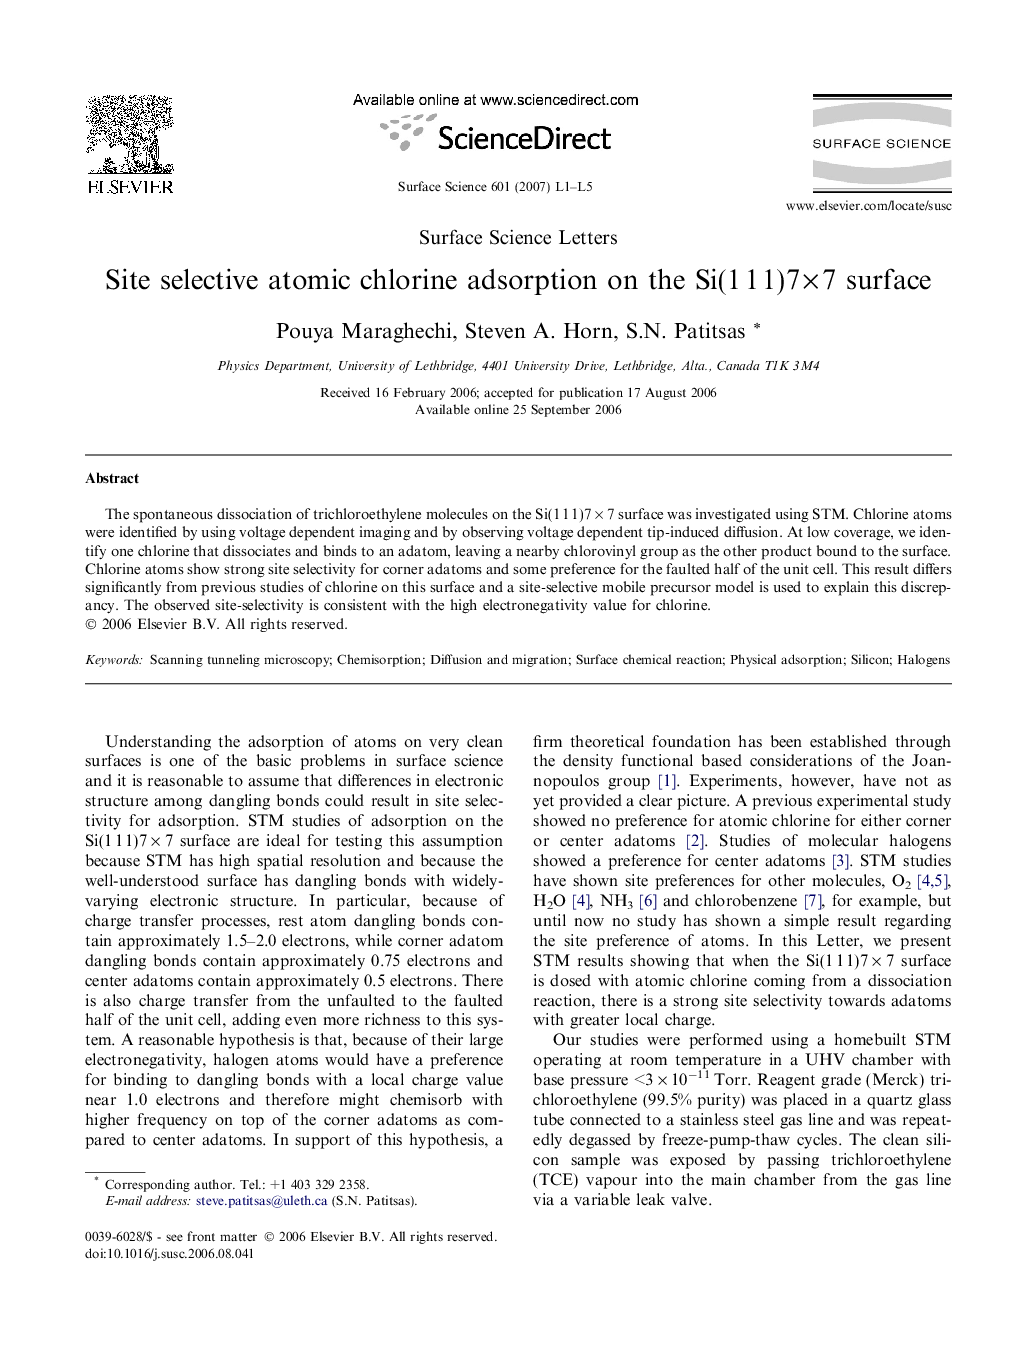 Site selective atomic chlorine adsorption on the Si(1 1 1)7 Ã 7 surface